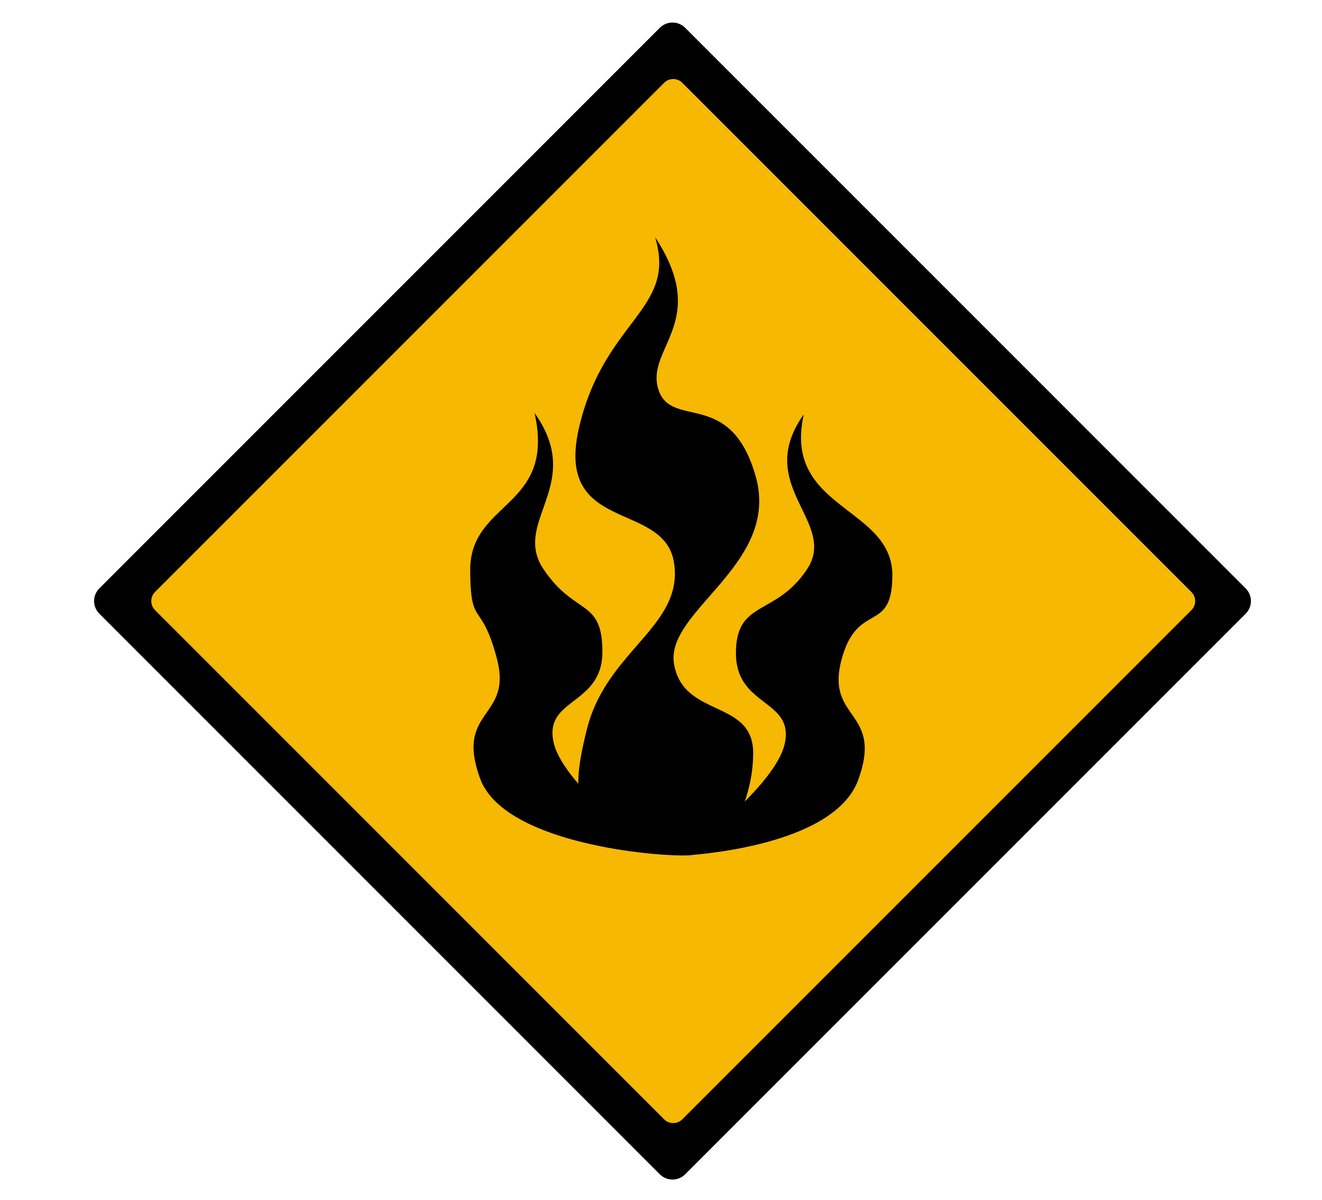 an orange and black sign showing flame symbols